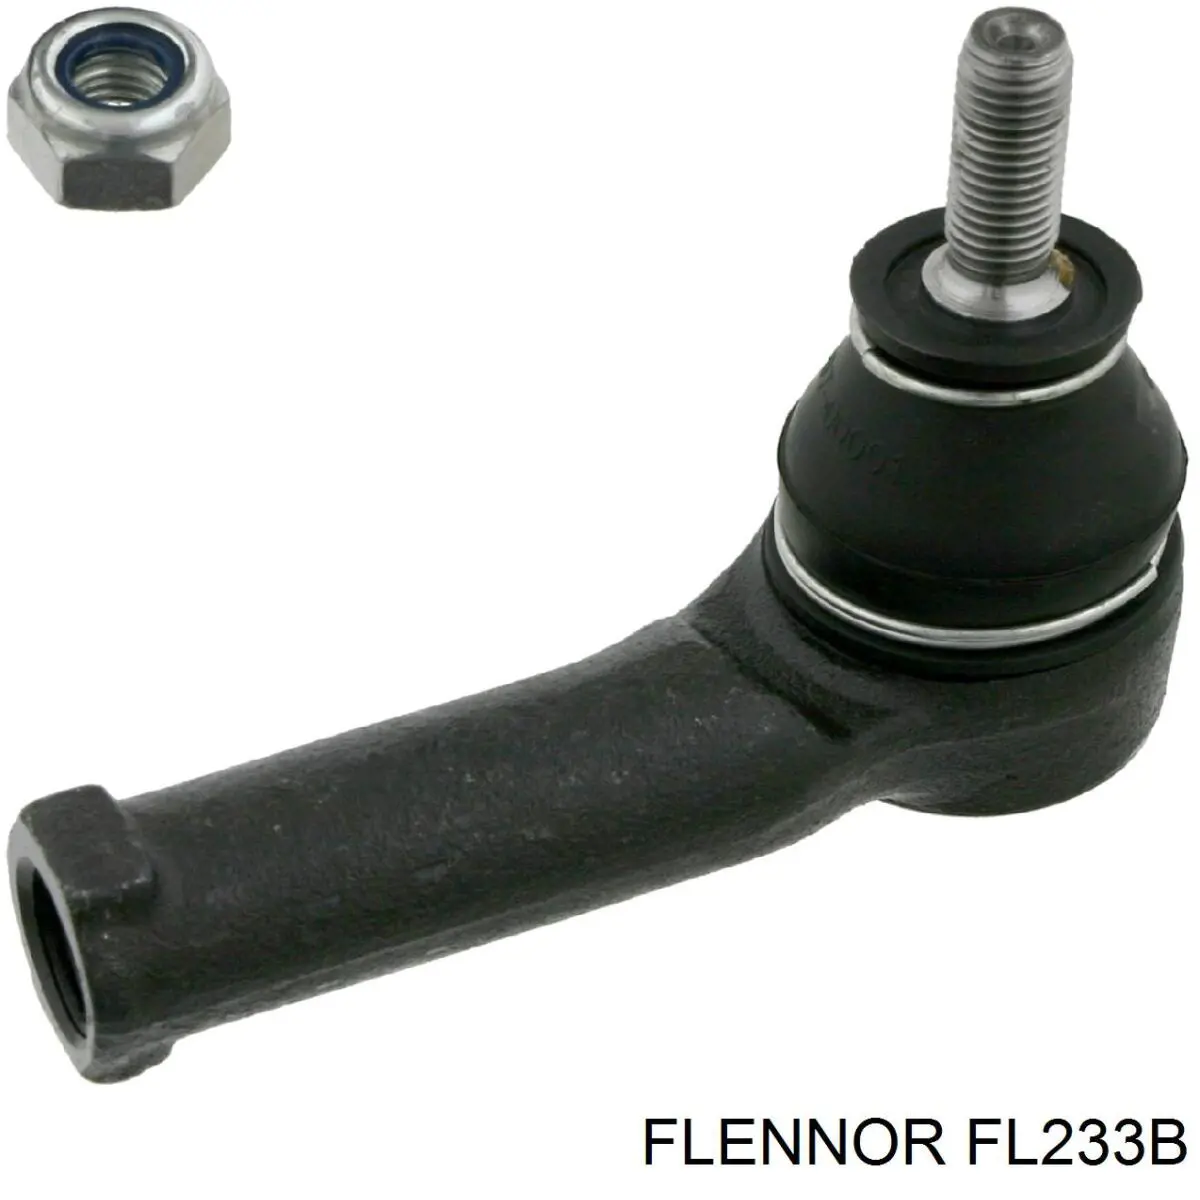 FL233B Flennor rótula barra de acoplamiento exterior